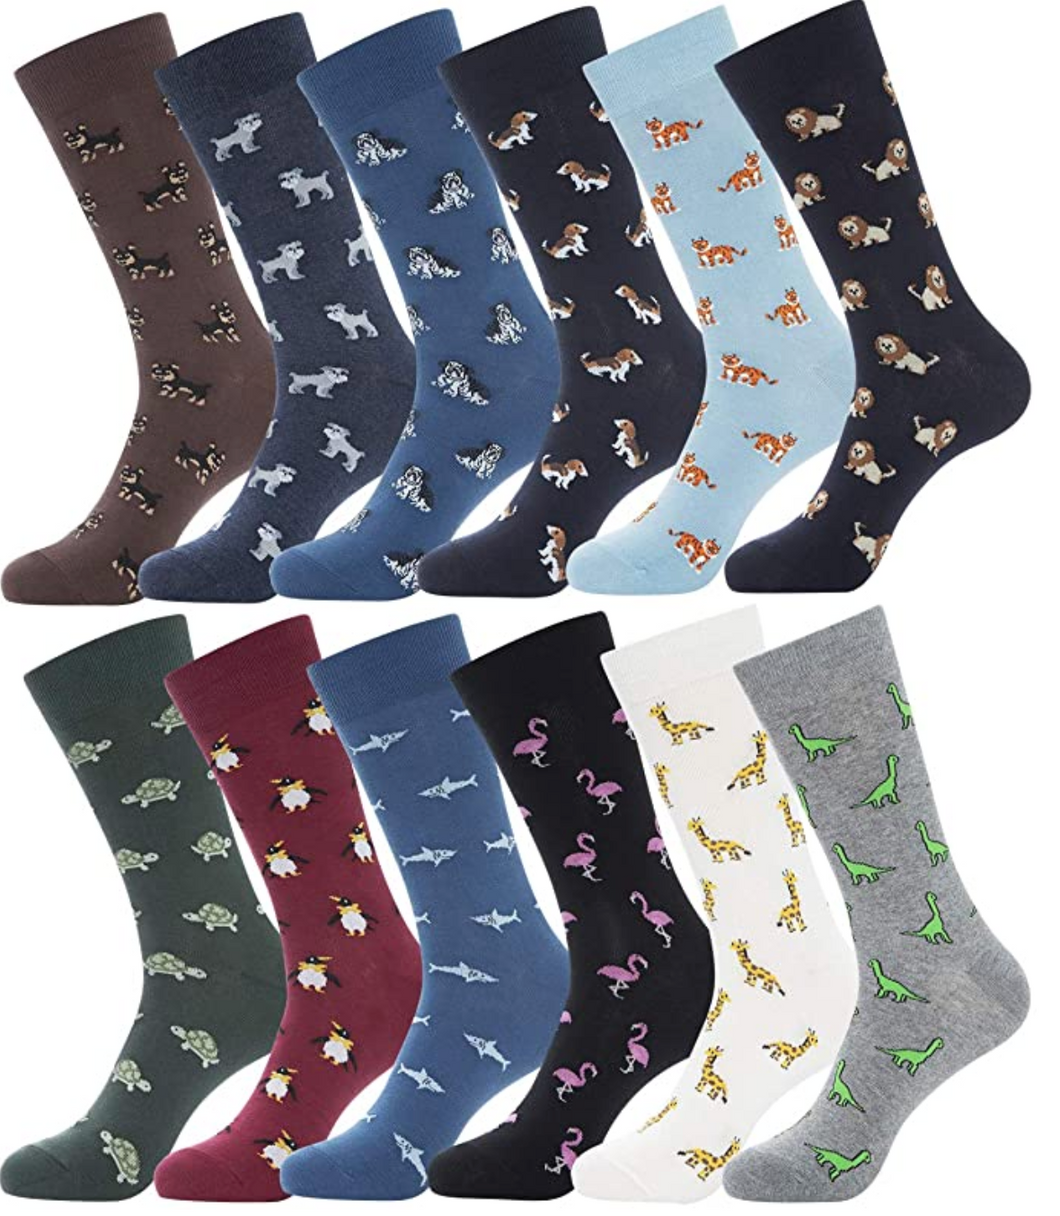 YEJIMONG Men's Colorful Novelty Dress Socks - Animal Pattern (12 Pairs / Size 9-12 / Cotton)